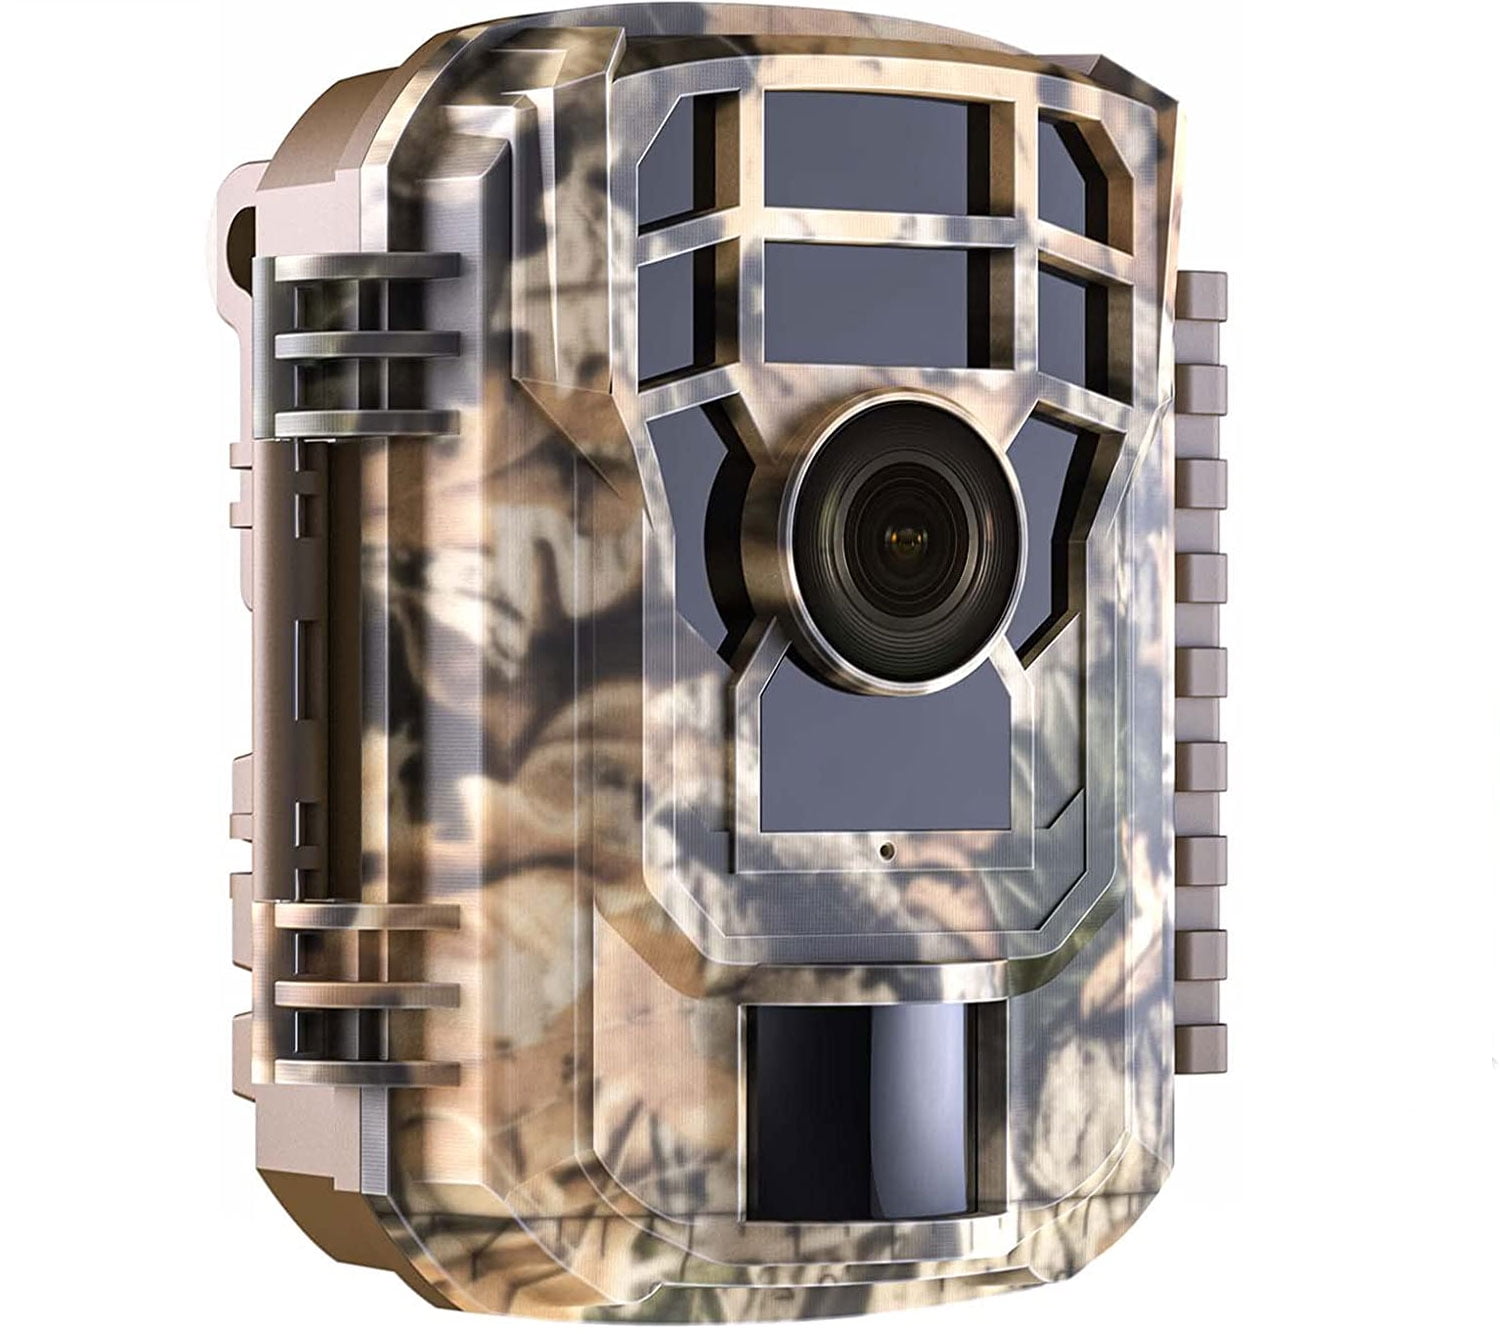 APEMAN Wildlife Camera 20MP 1080P Trail Camera Night Detection Game Camera with 